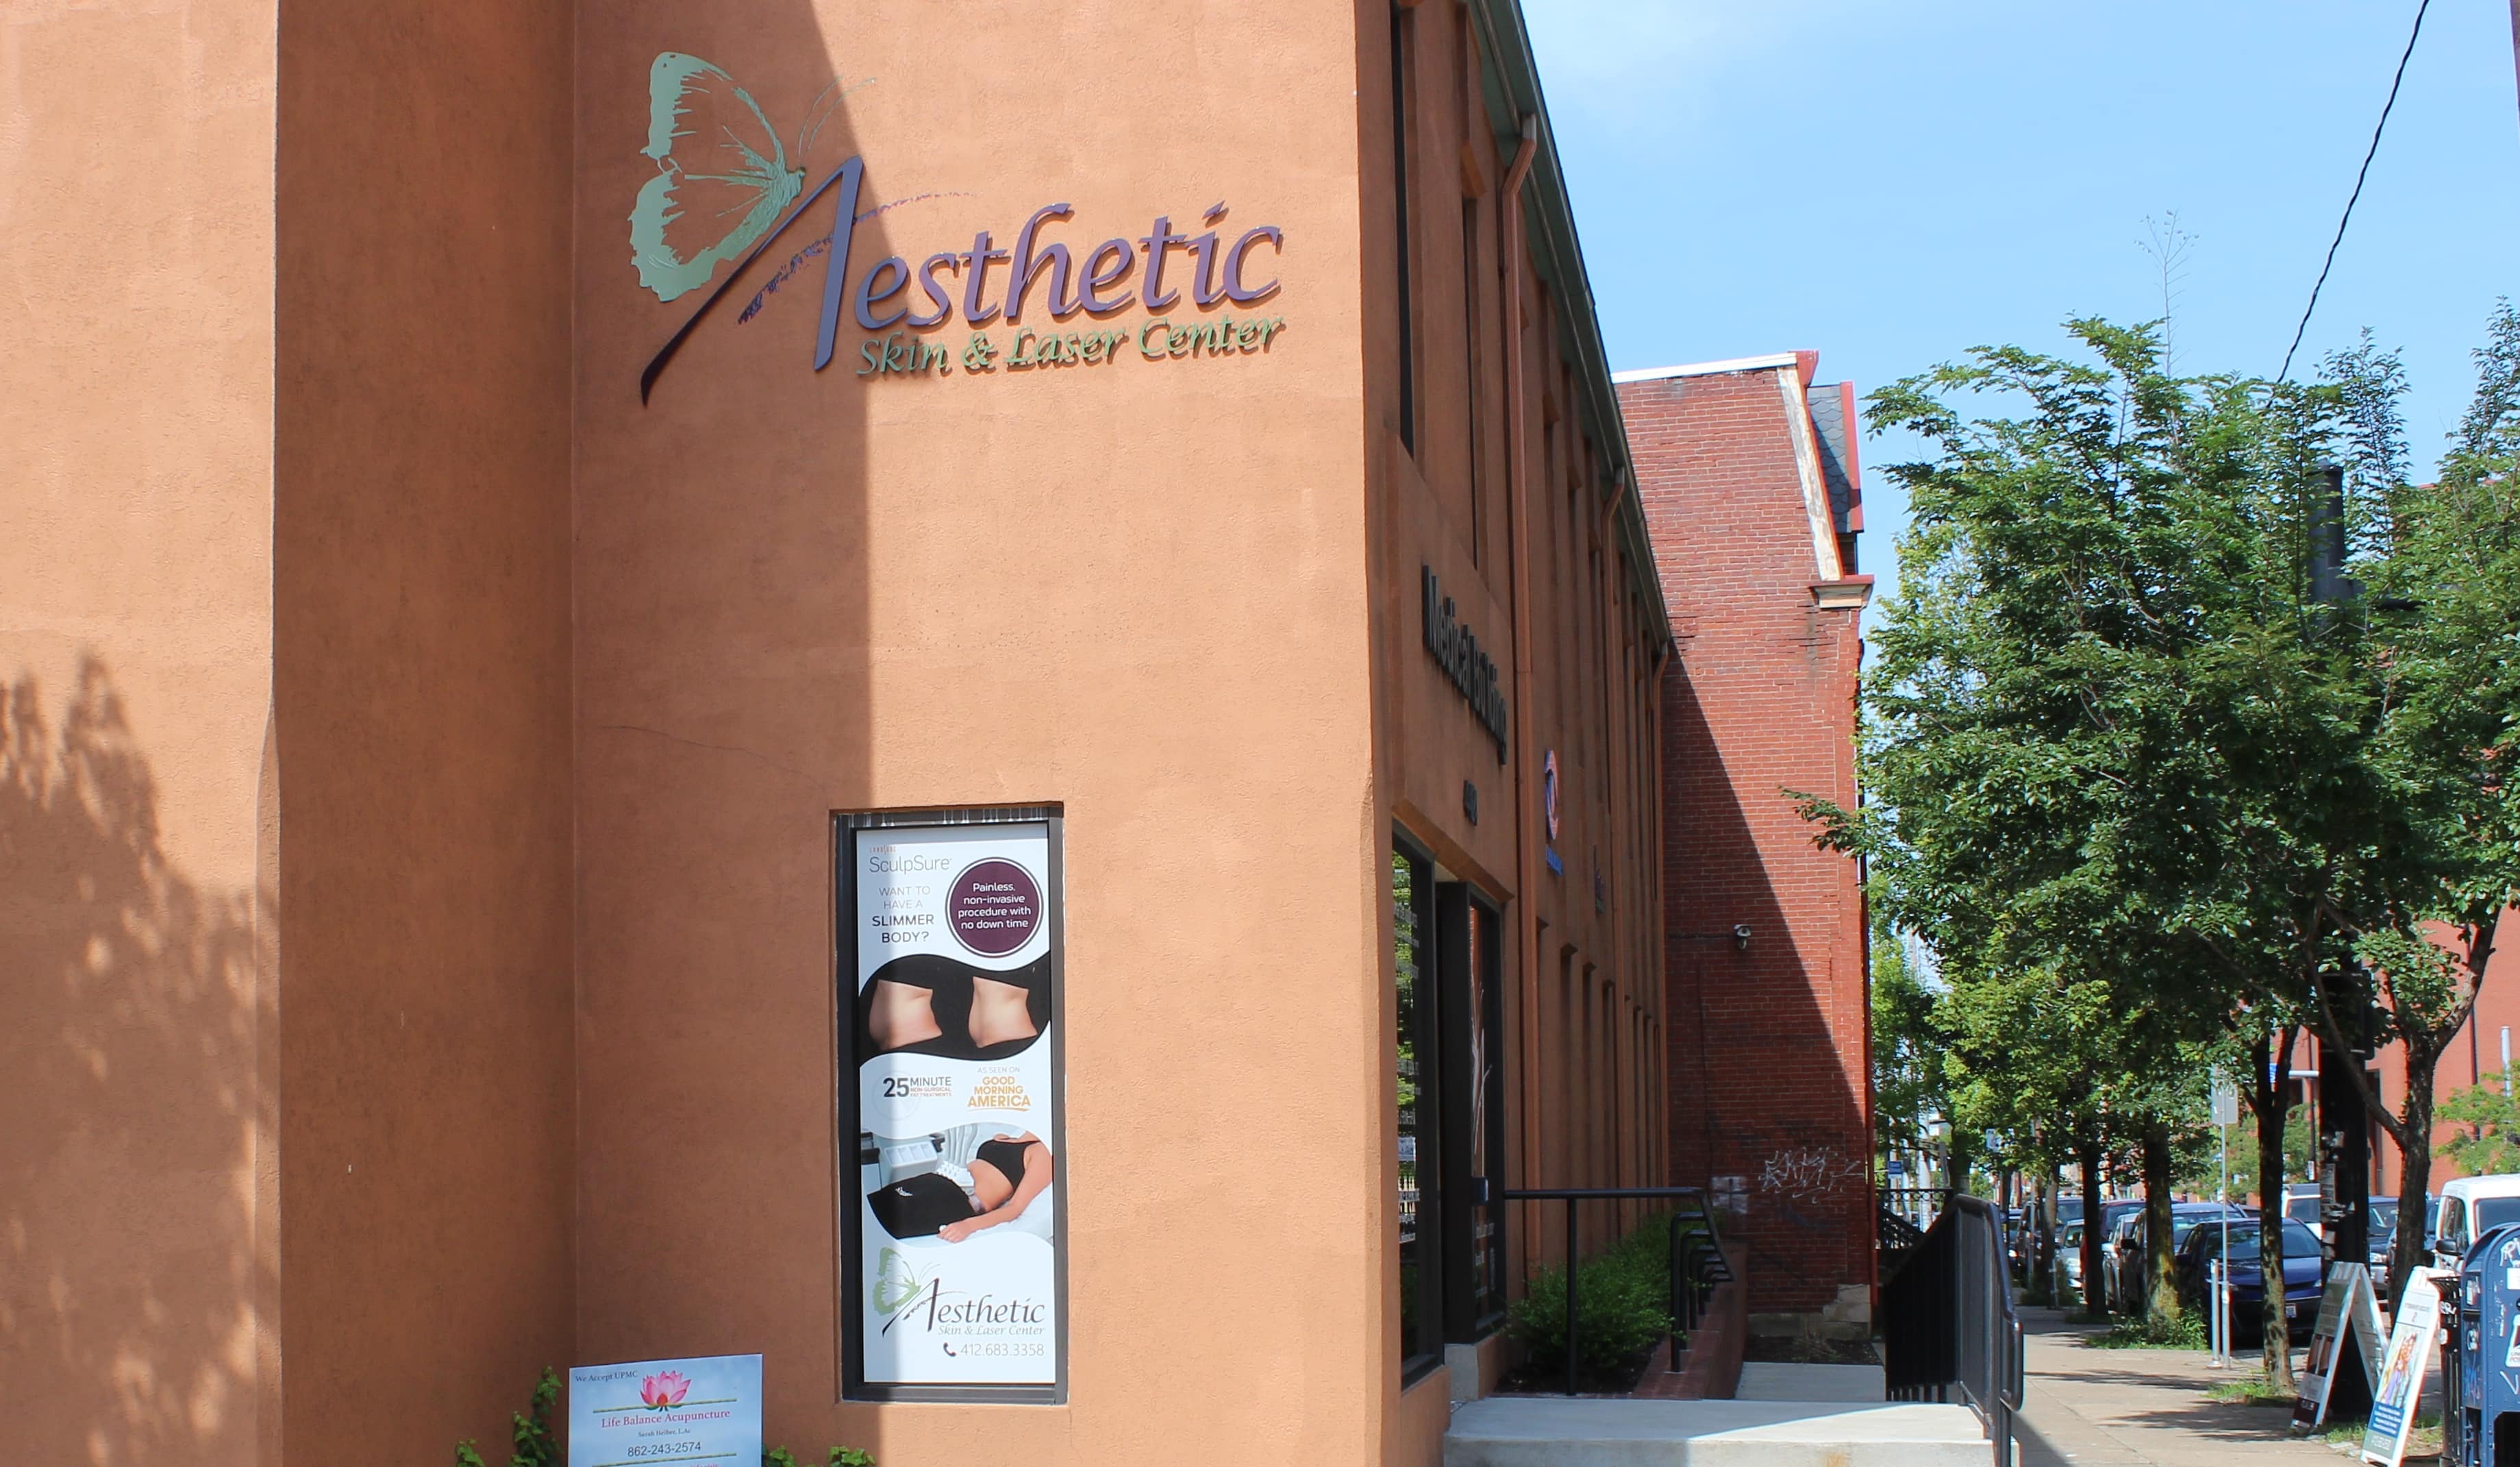 Aesthetic Skin & Laser Center Pittsburgh, US, face hair laser removal